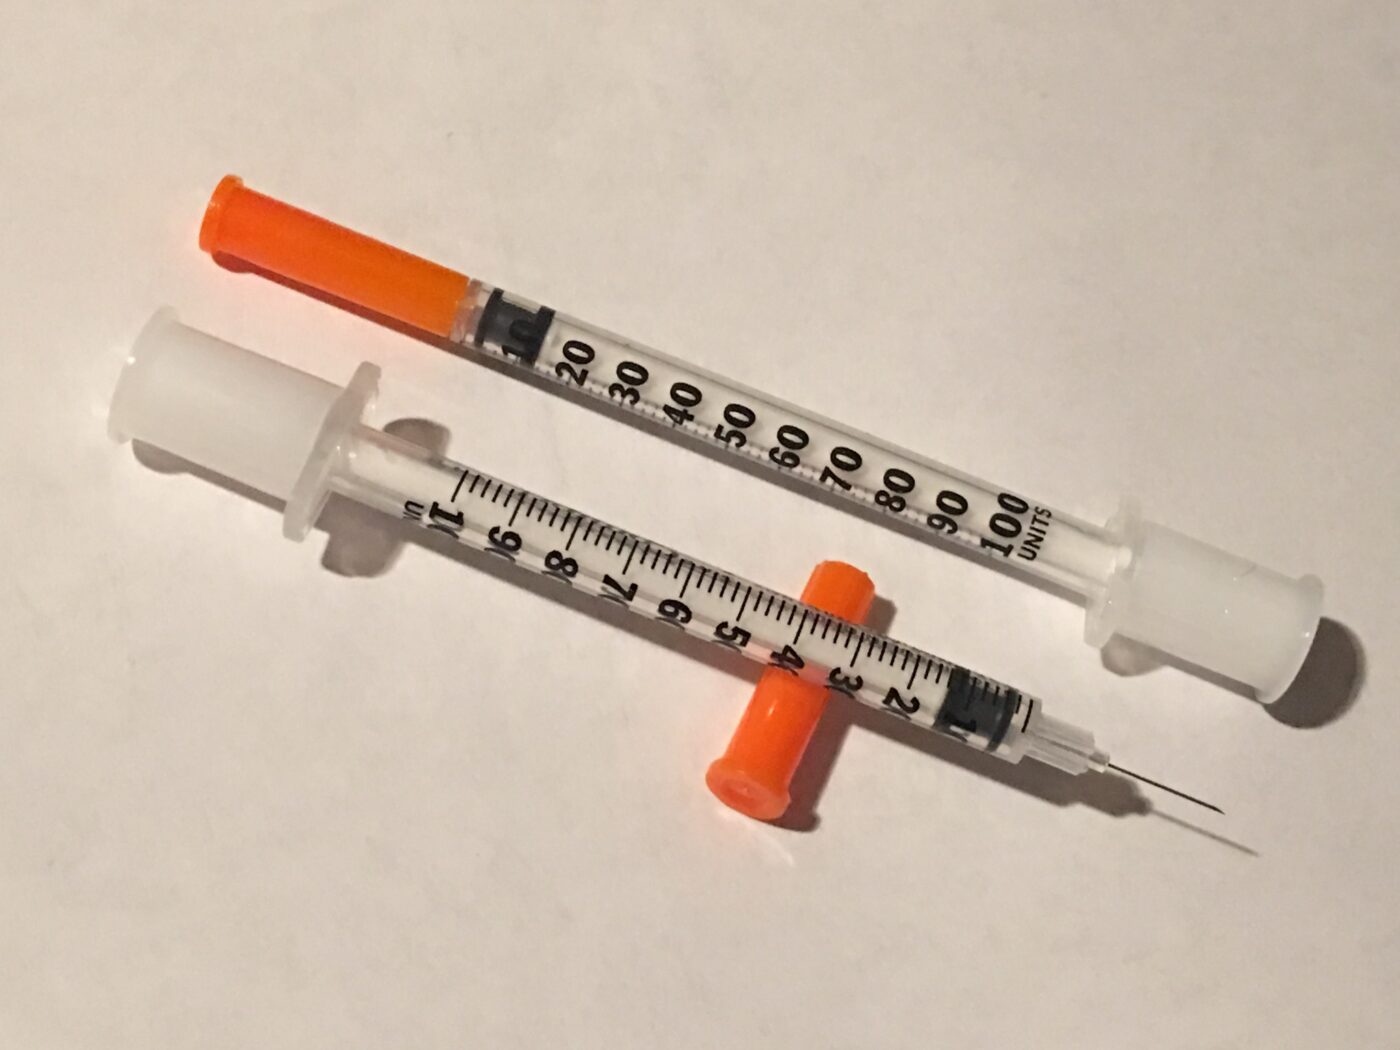 1 cc Insulin Syringe